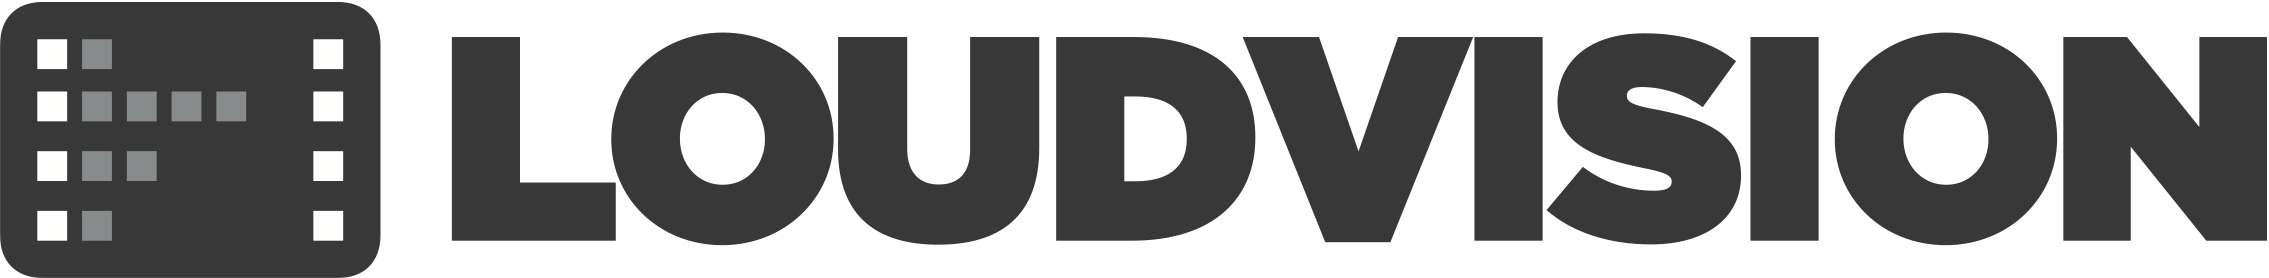 logo_Loud_vision